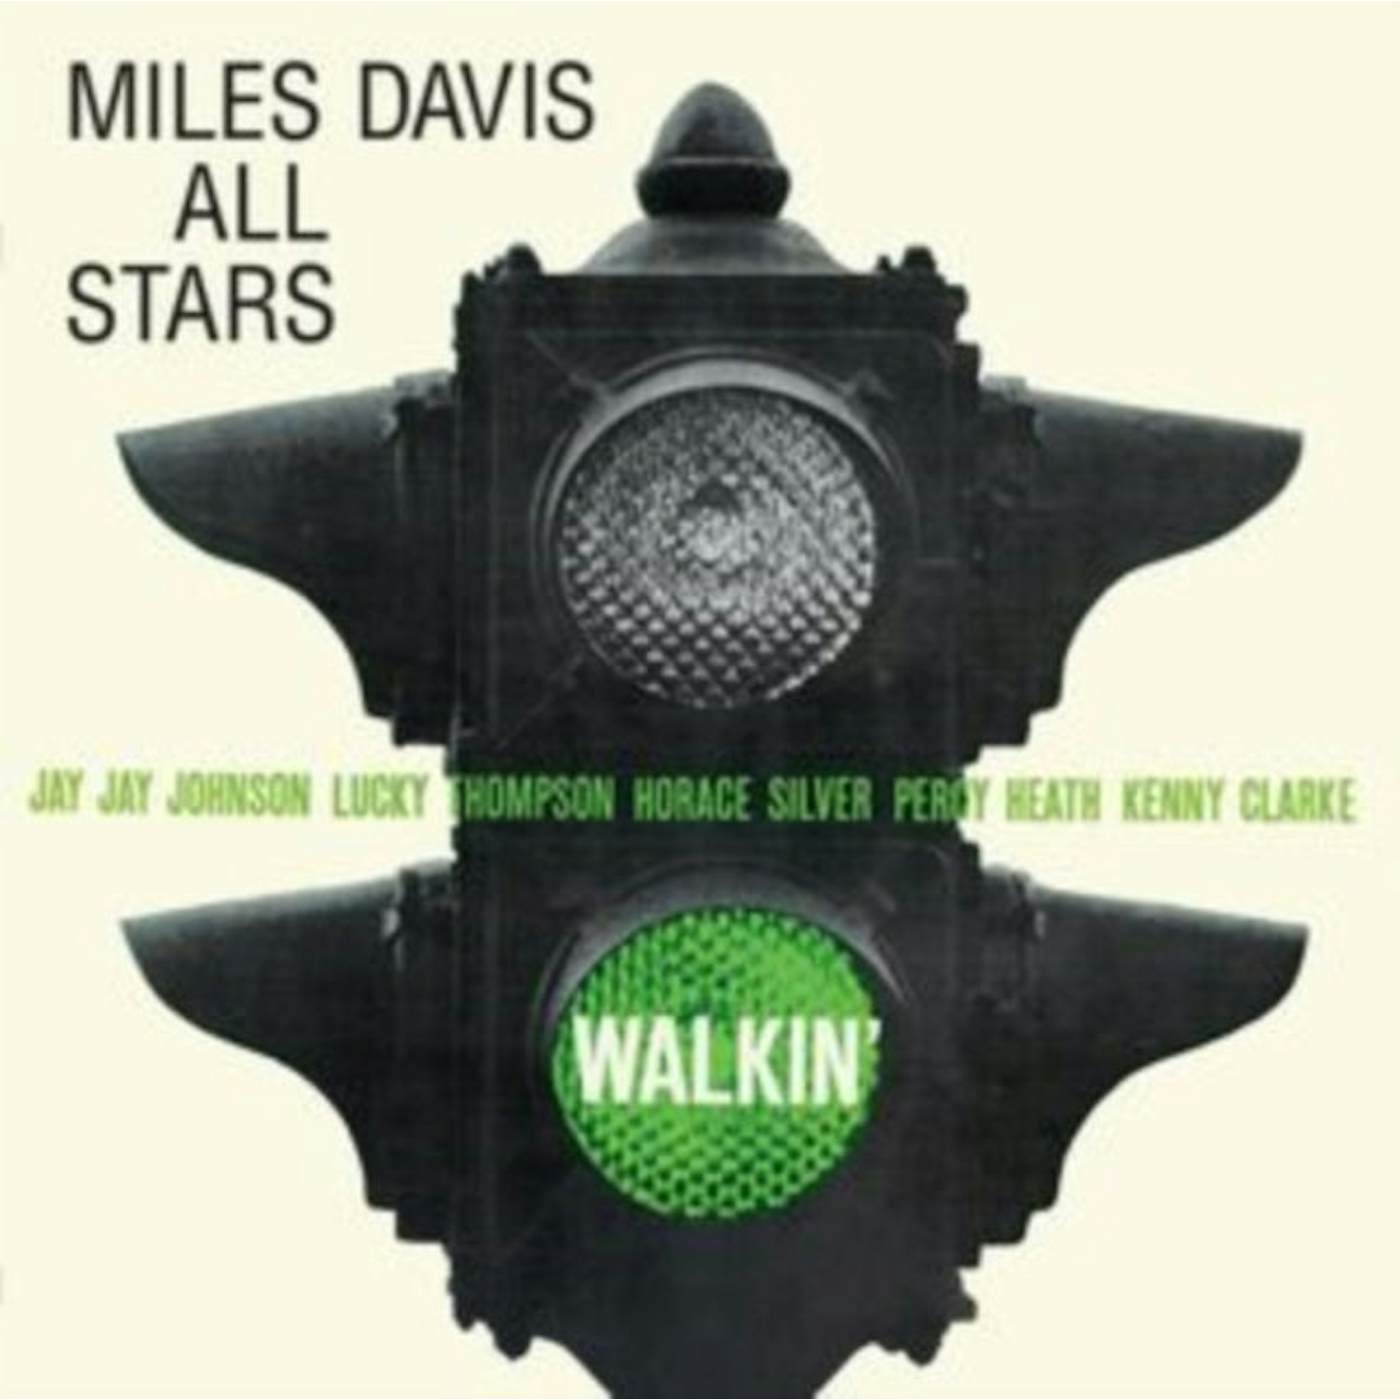 Miles Davis All Stars LP - Walkin' (Limited Edition) (+1 Bonus Track) (Vinyl)